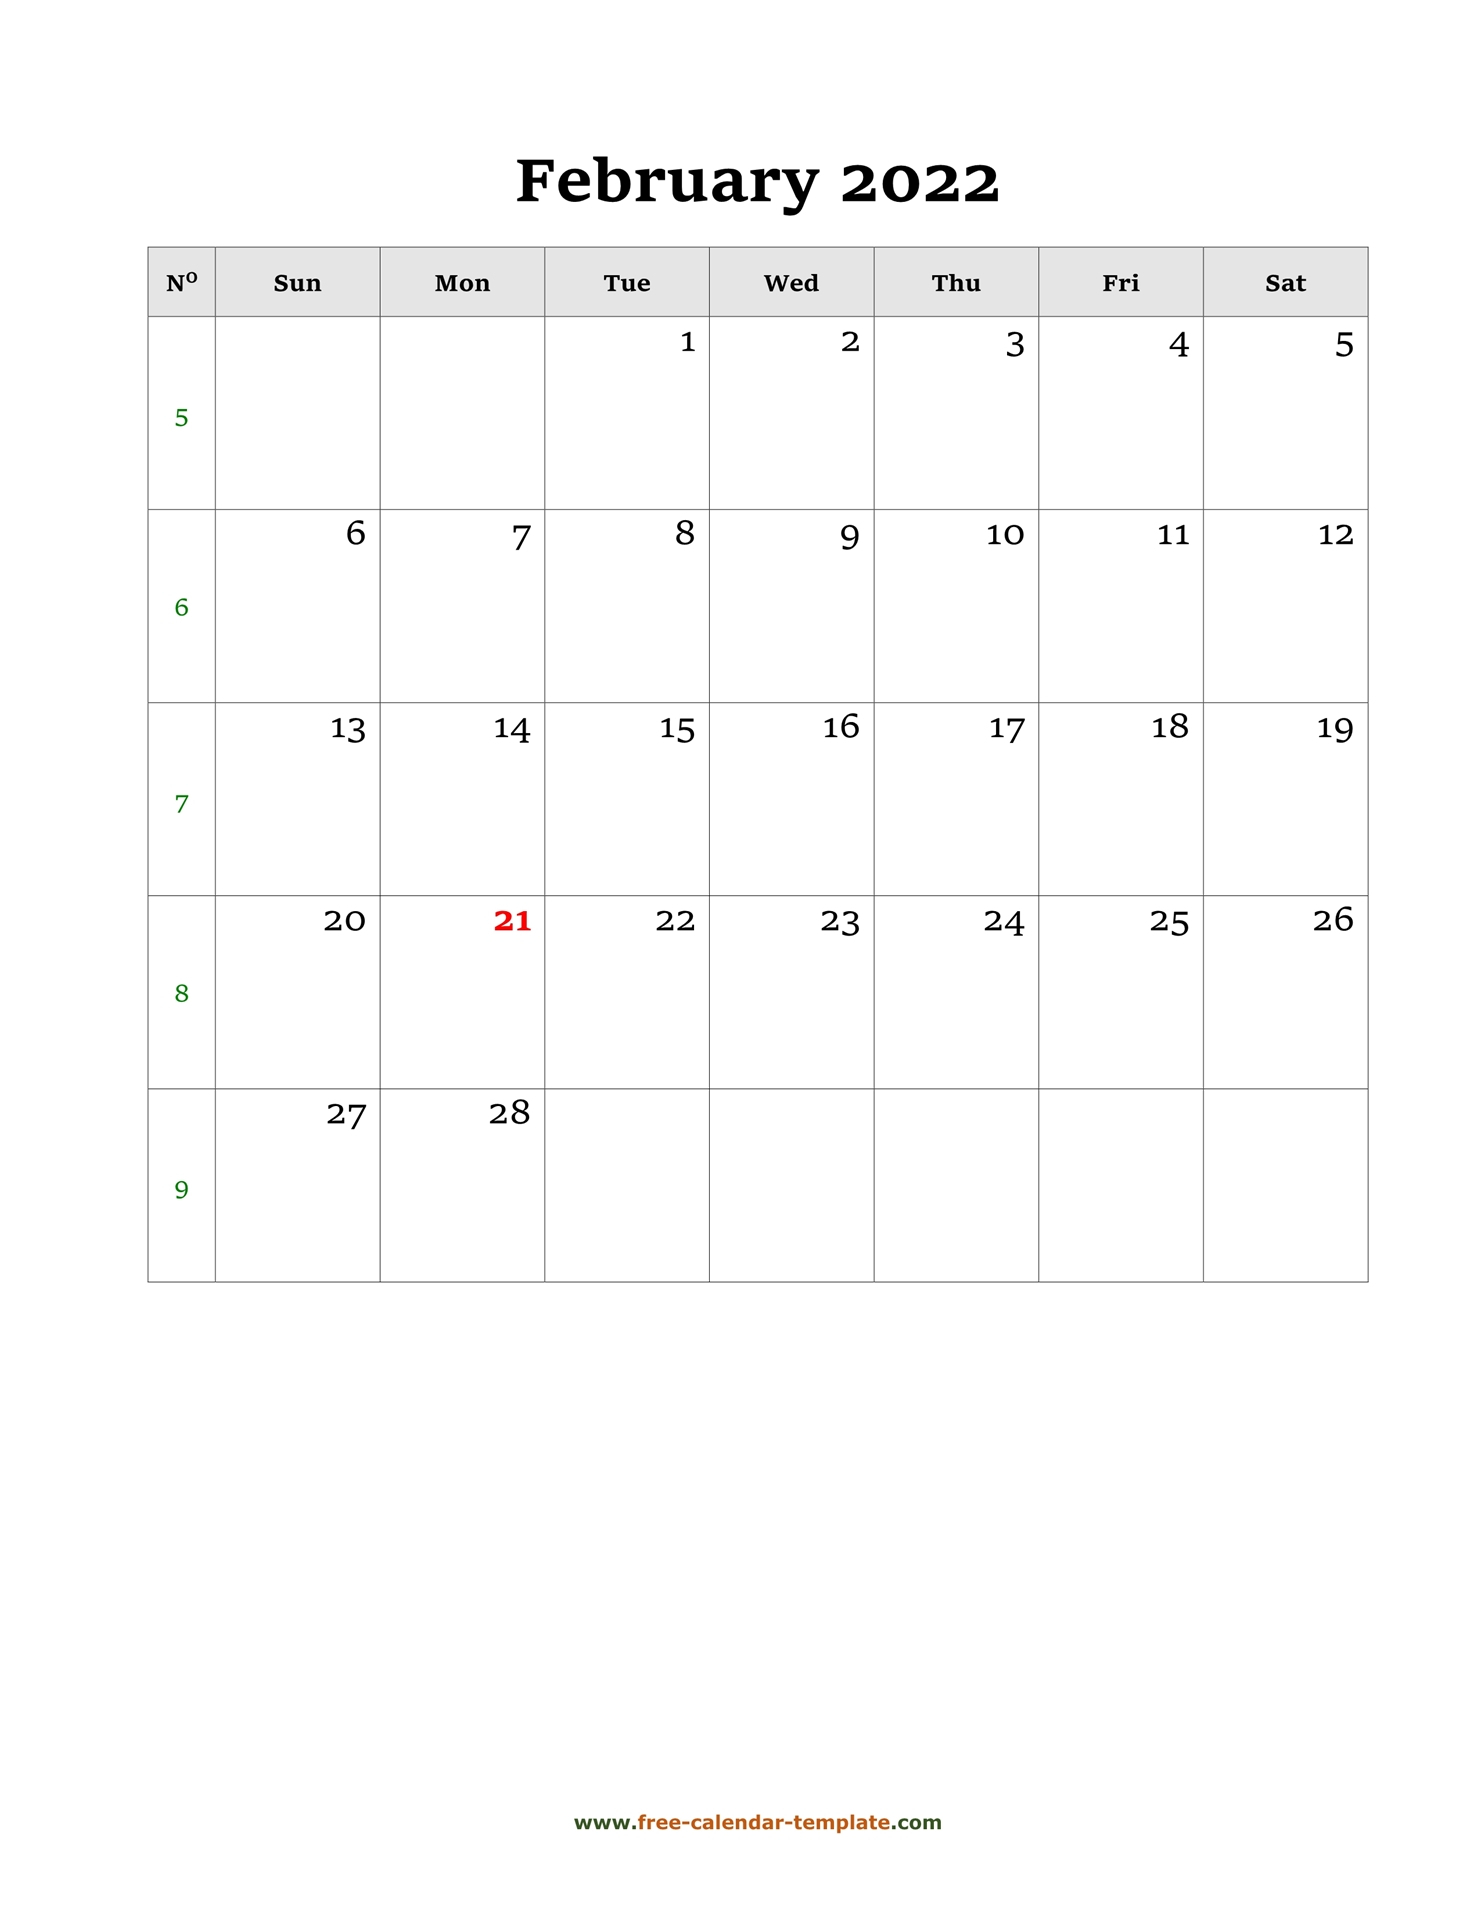 February 2022 Free Calendar Tempplate | Free-Calendar